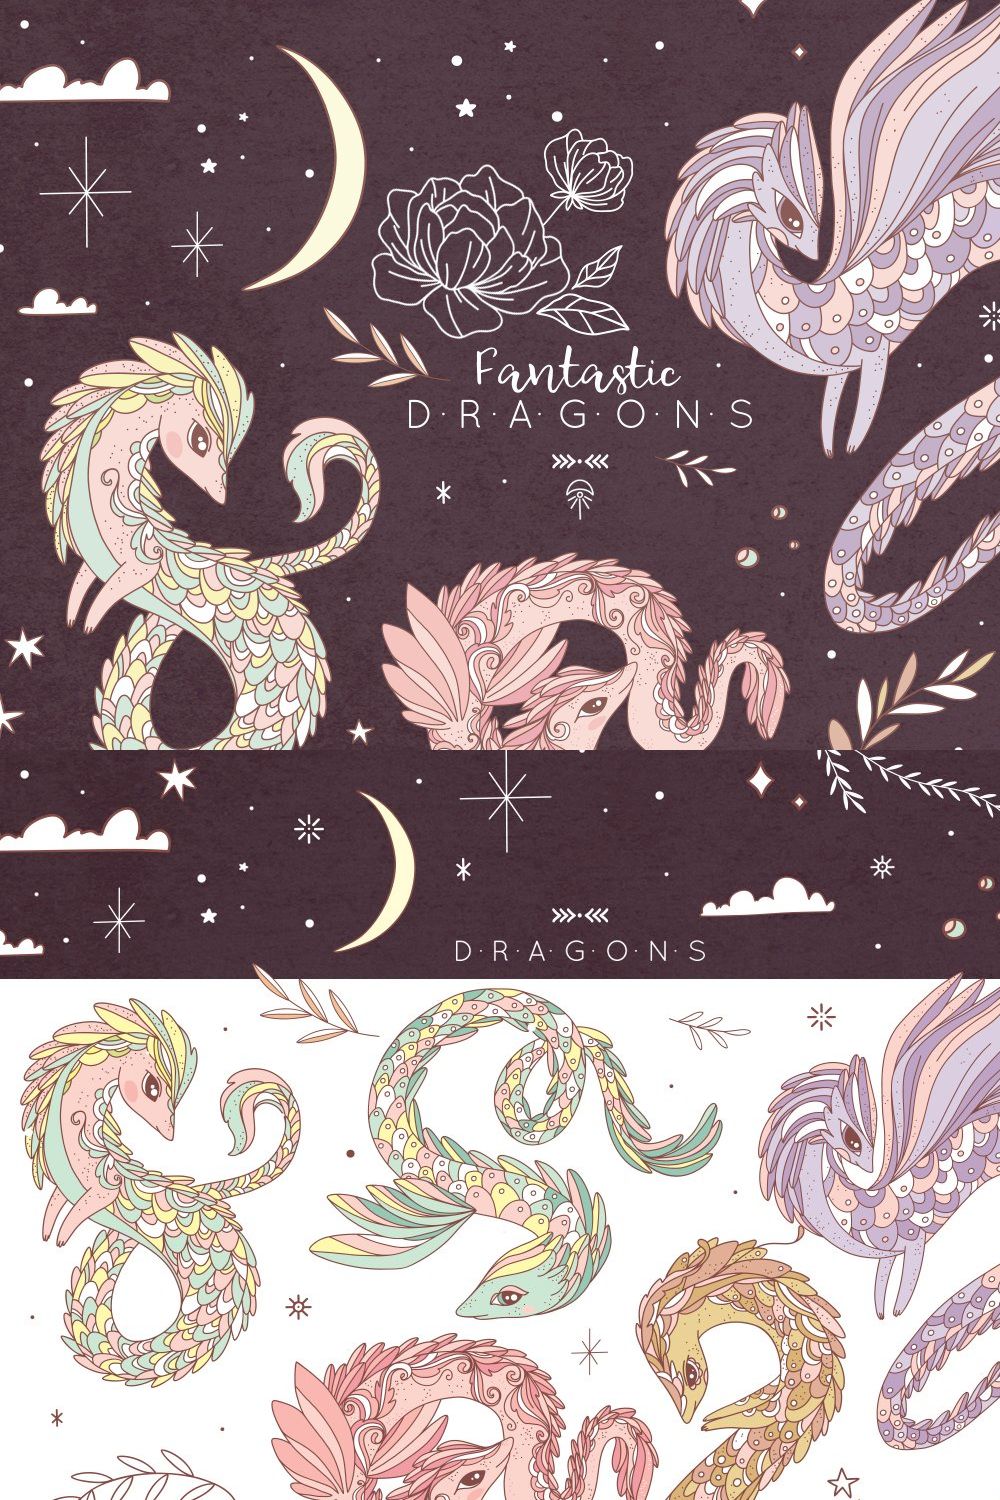 Fantastic Dragon illustration pinterest preview image.